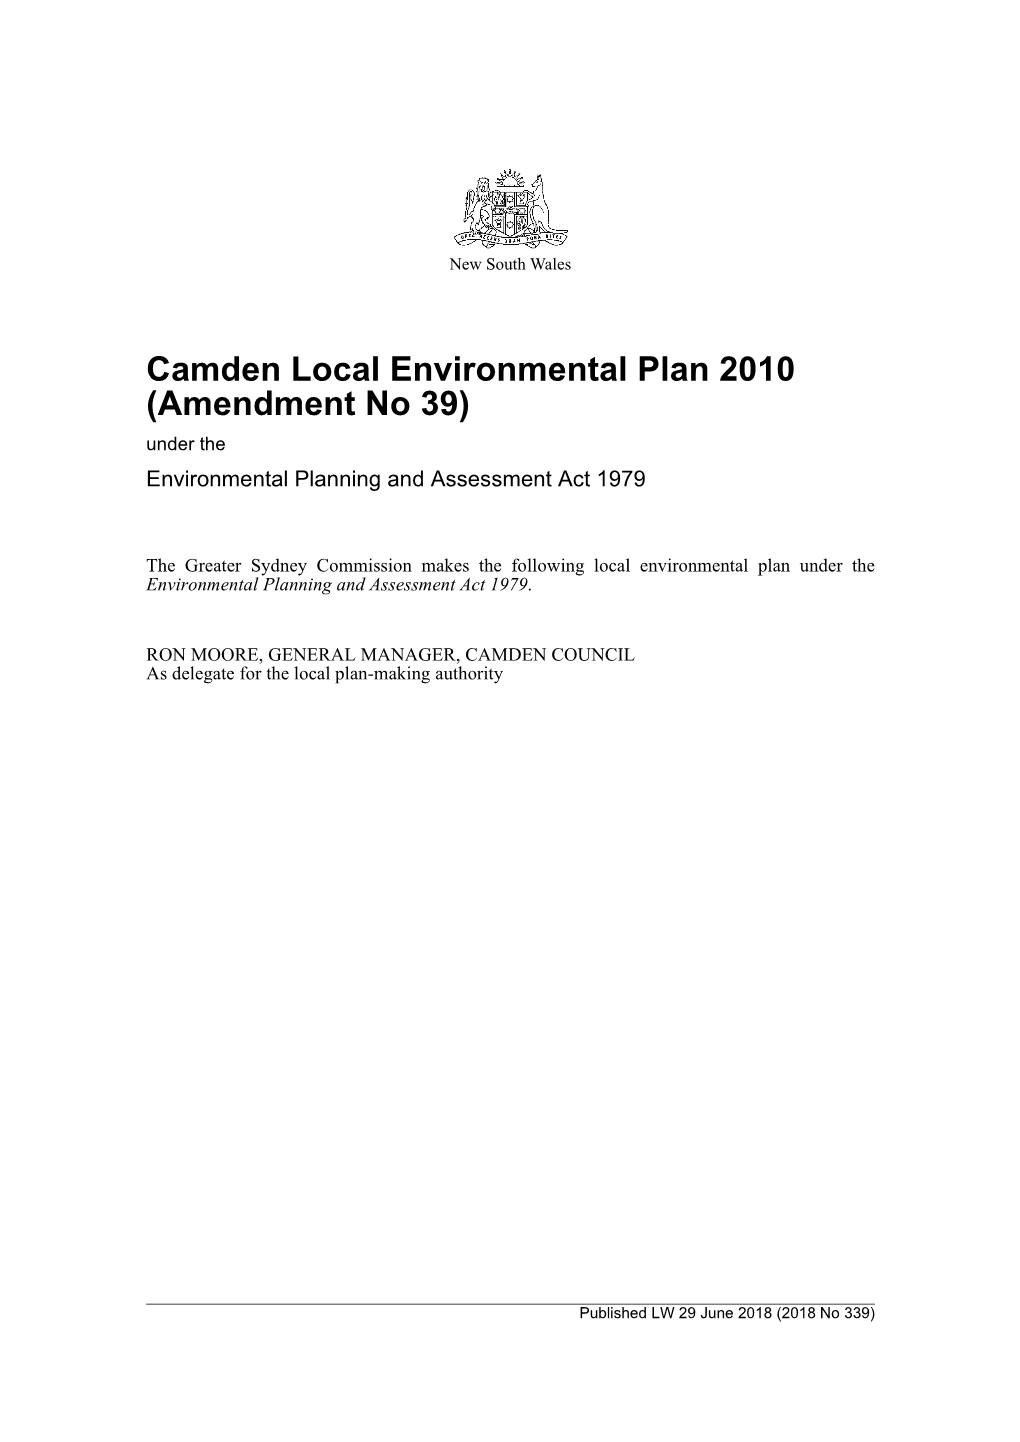 Camden Local Environmental Plan 2010 (Amendment No 39) Under the Environmental Planning and Assessment Act 1979